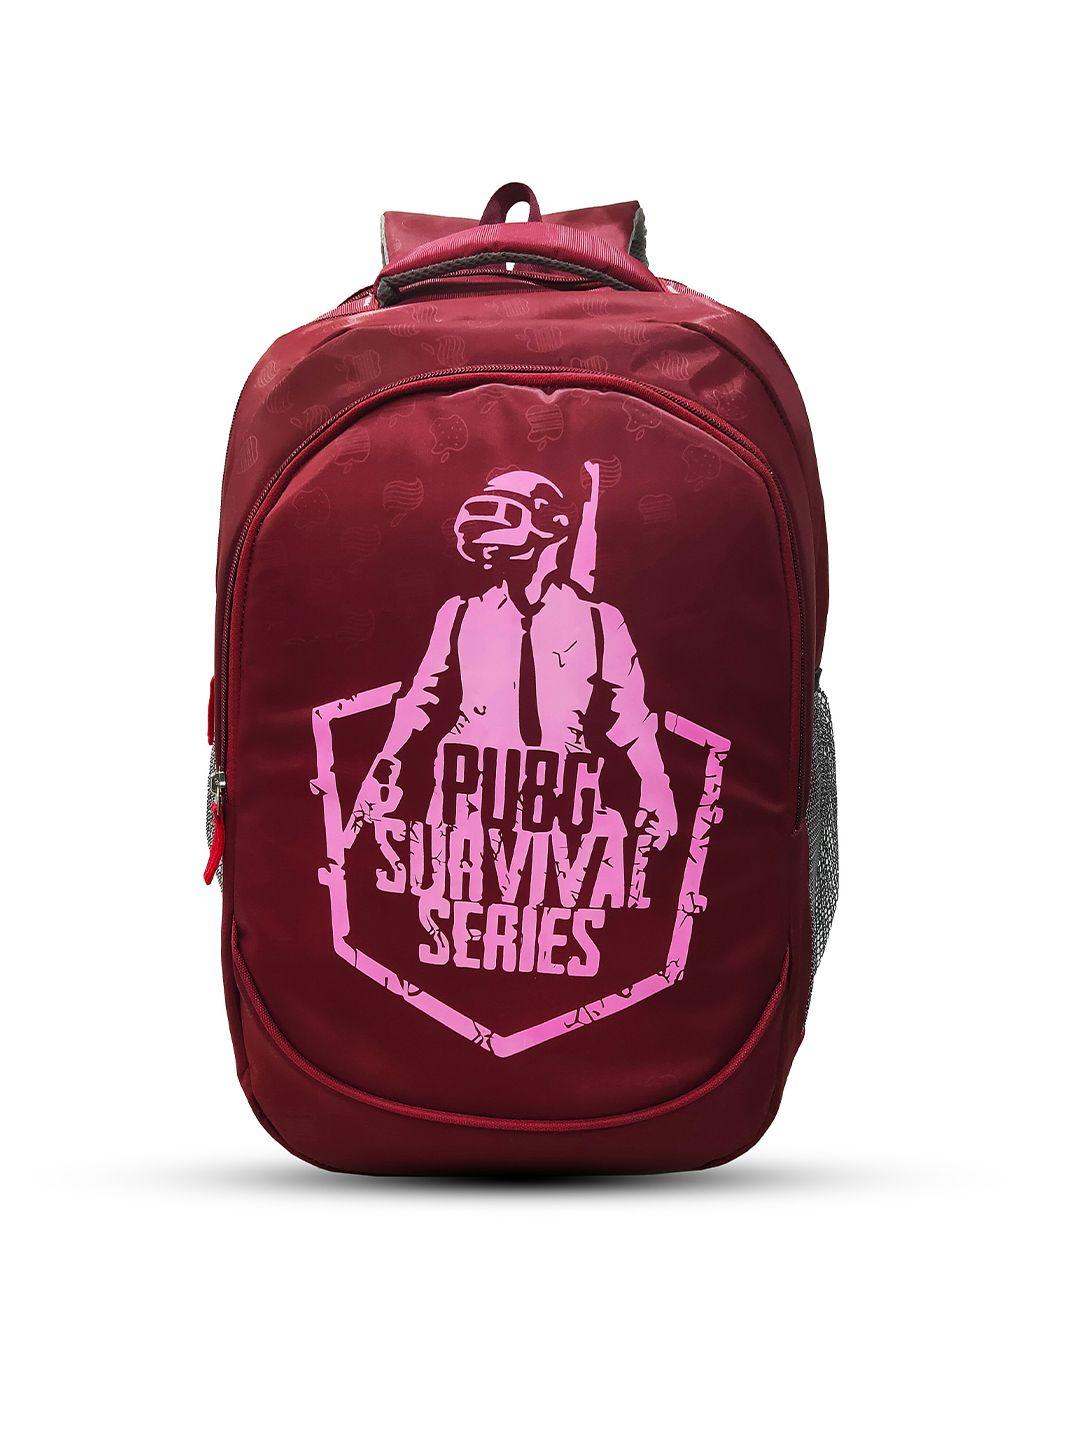 trunkit unisex maroon graphic waterproof 15 inch laptop backpack